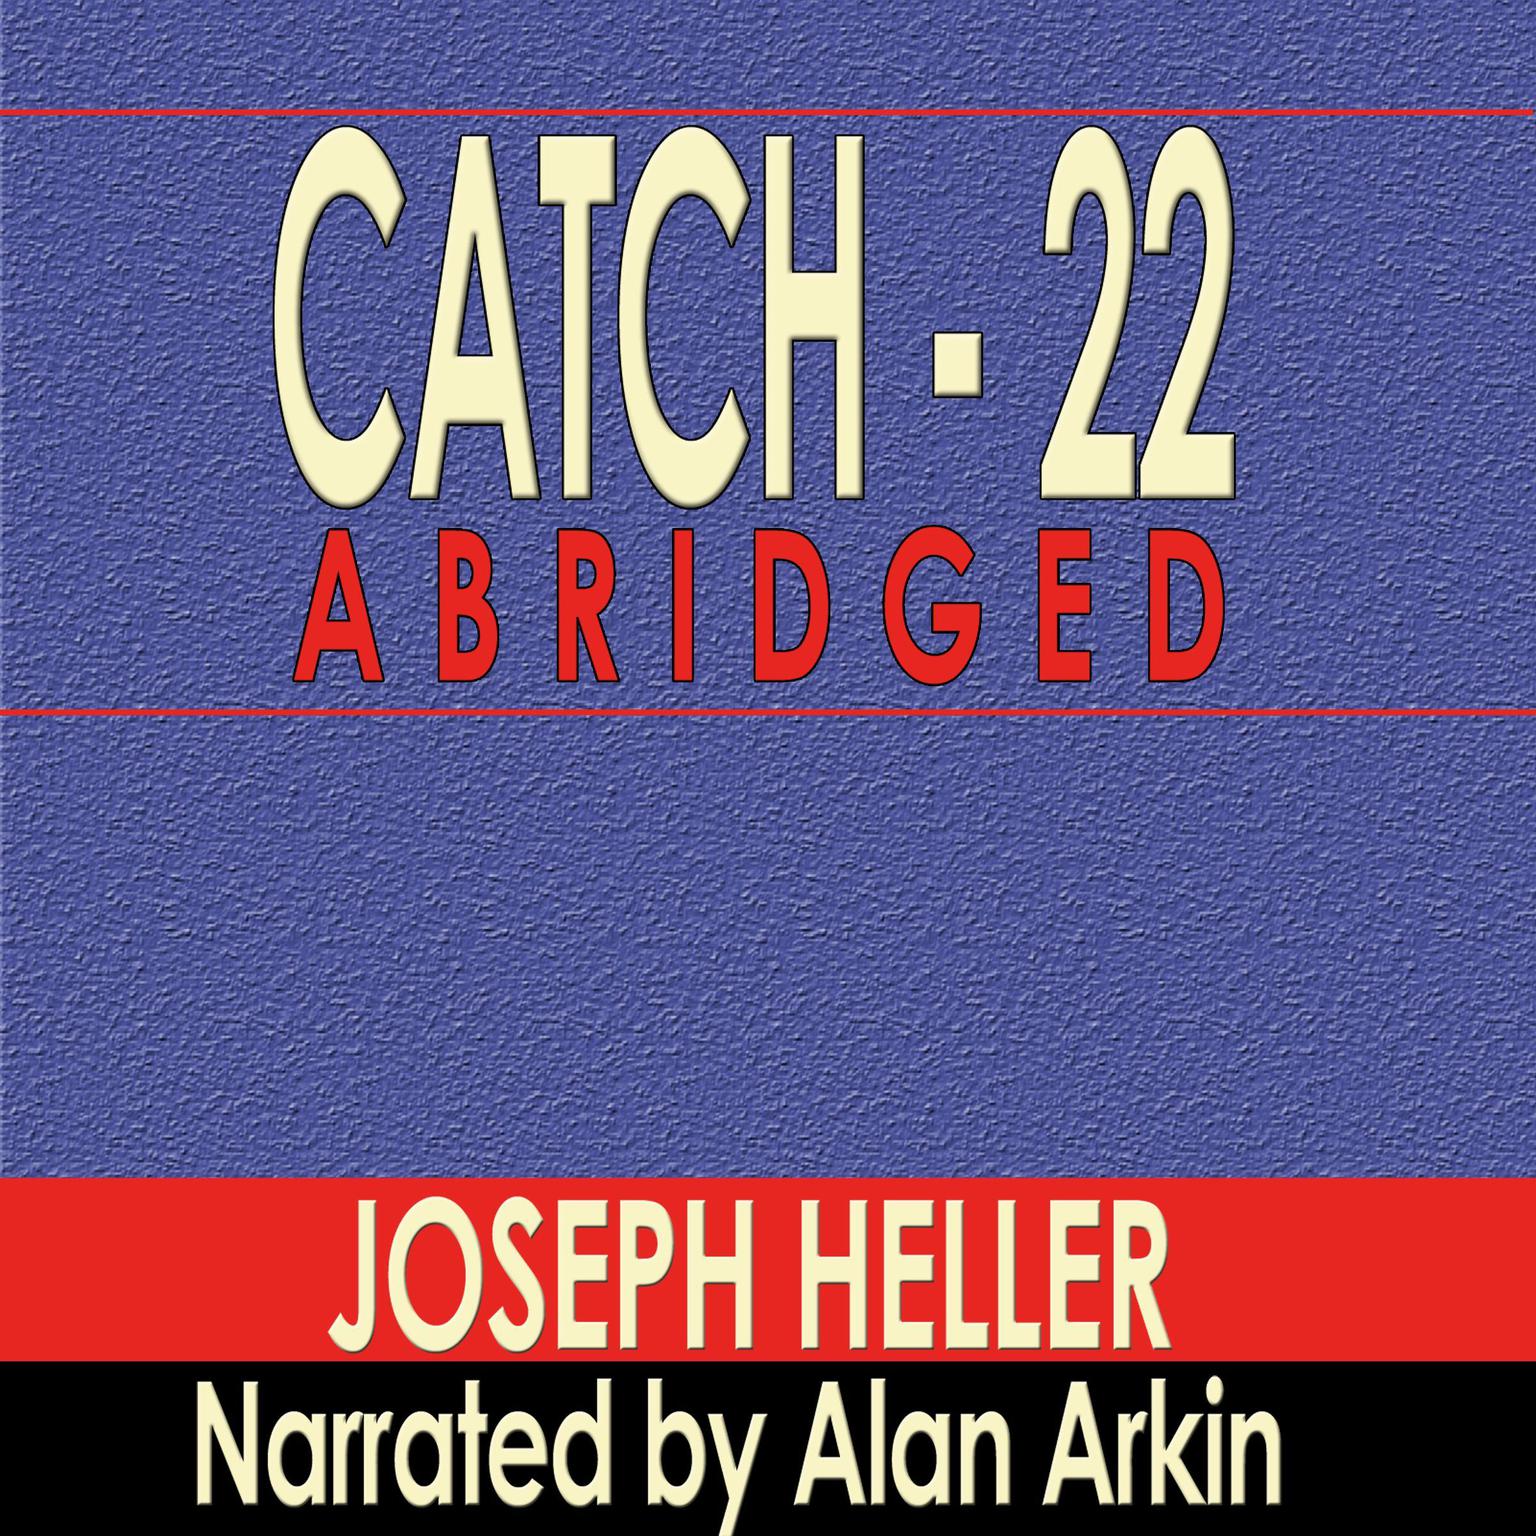 Catch 22 (Abridged) (Abridged) Audiobook, by Joseph Heller